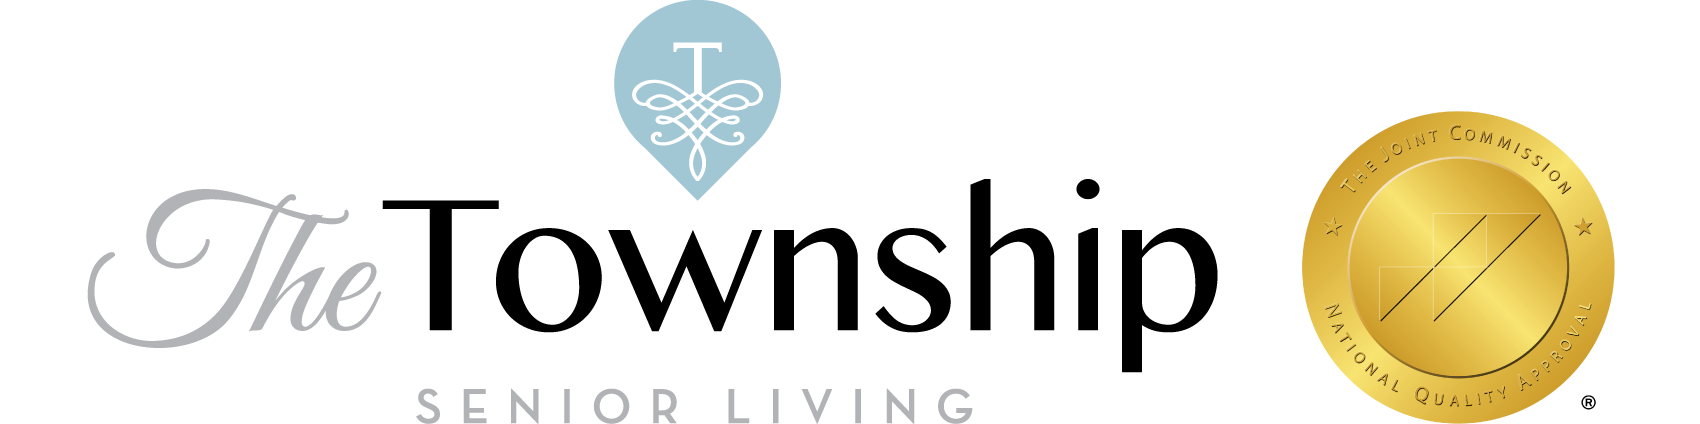 The Township Senior Living - Joint Commission Award Badge